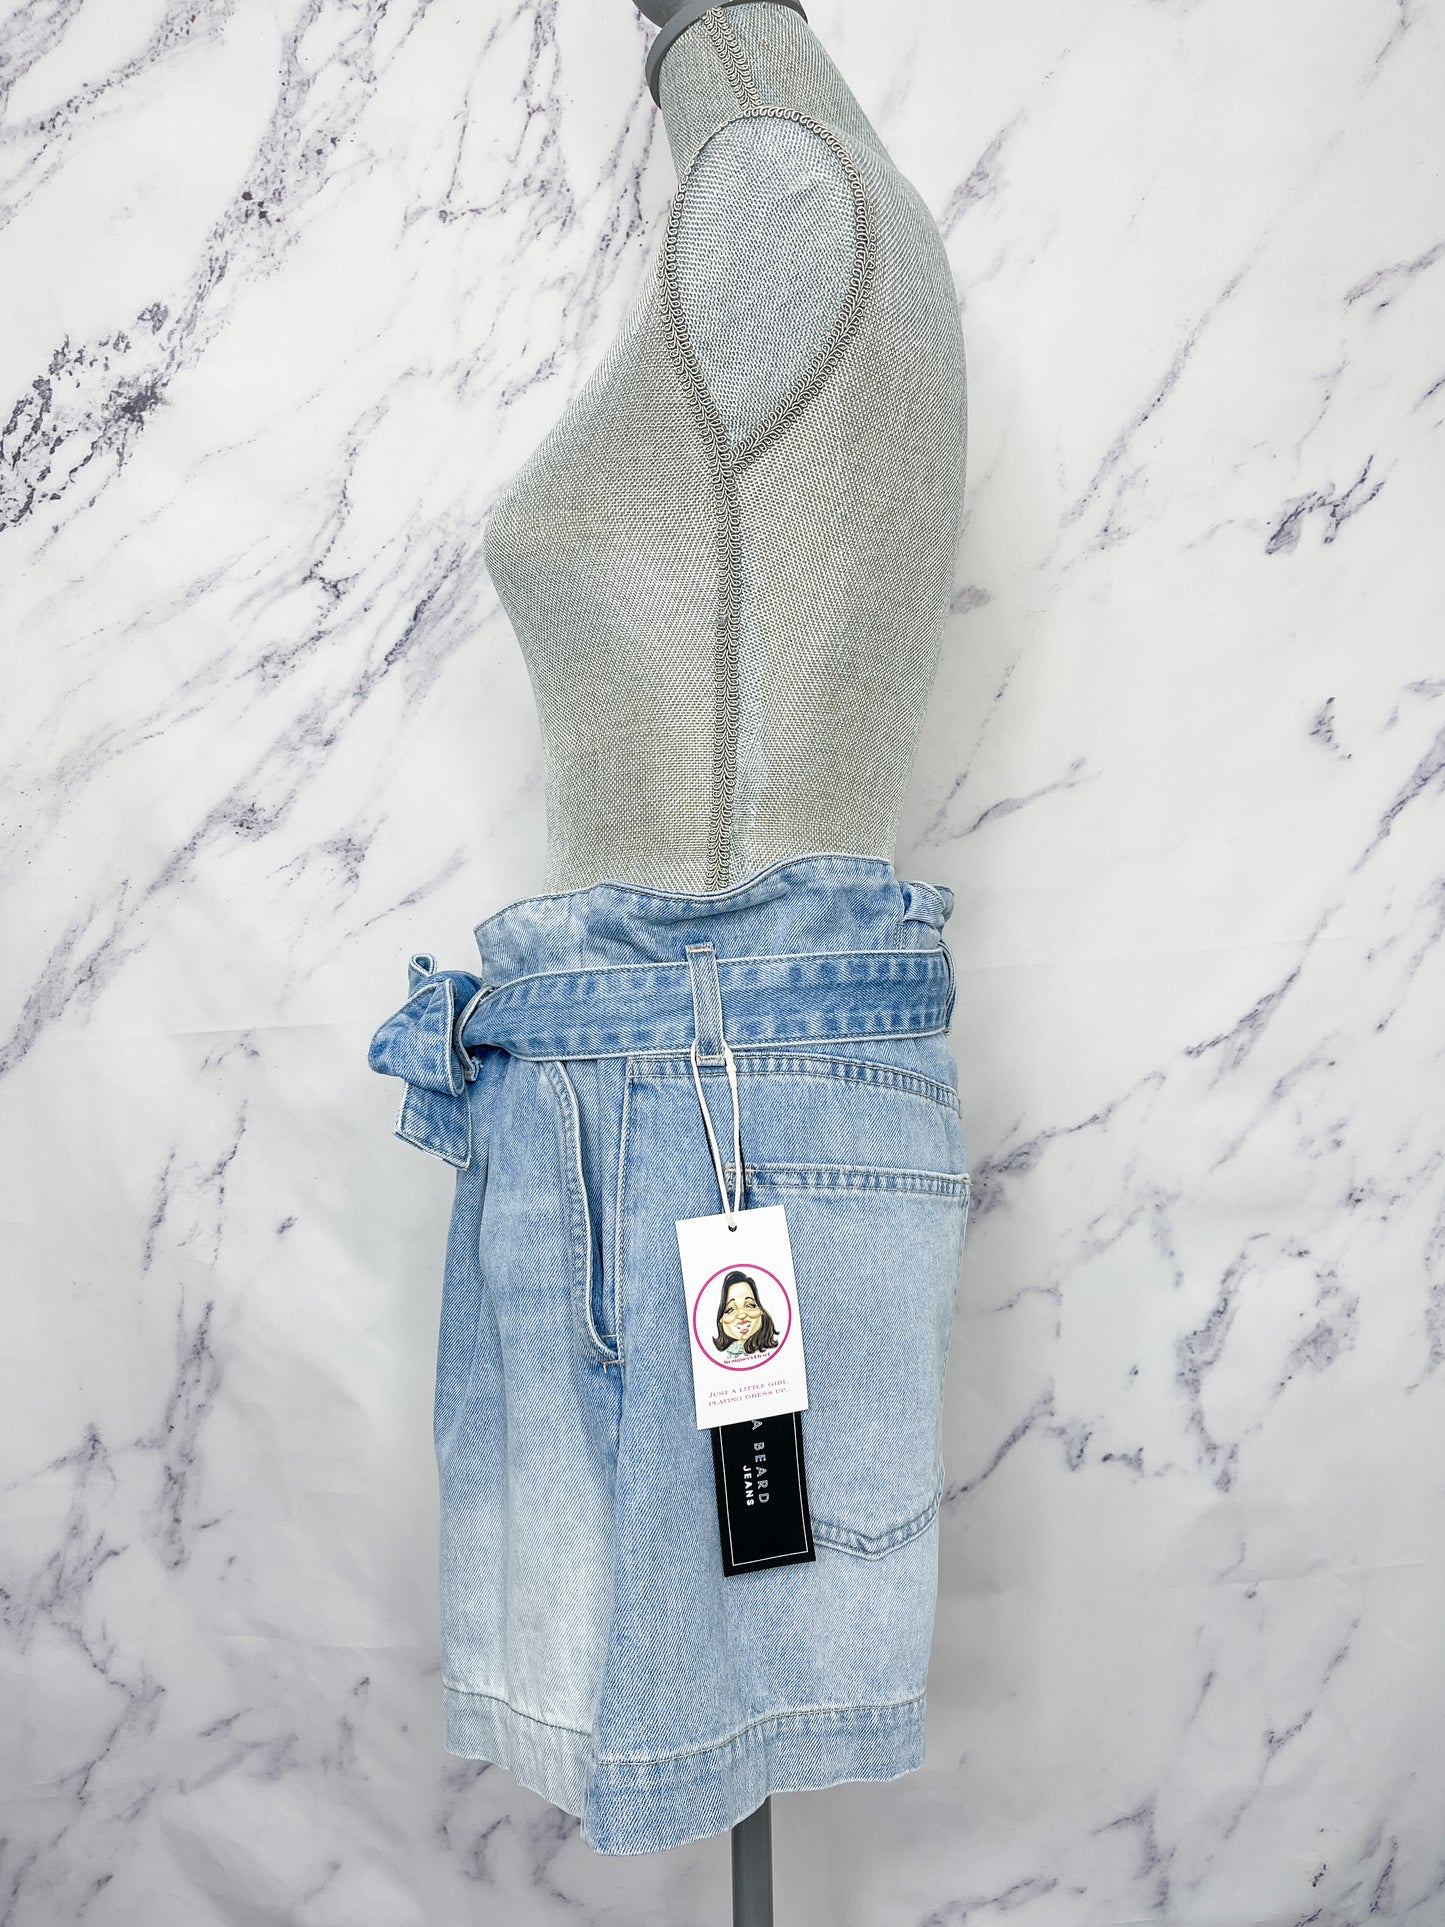 Veronica Beard | Paperbag Denim Shorts | Size 31